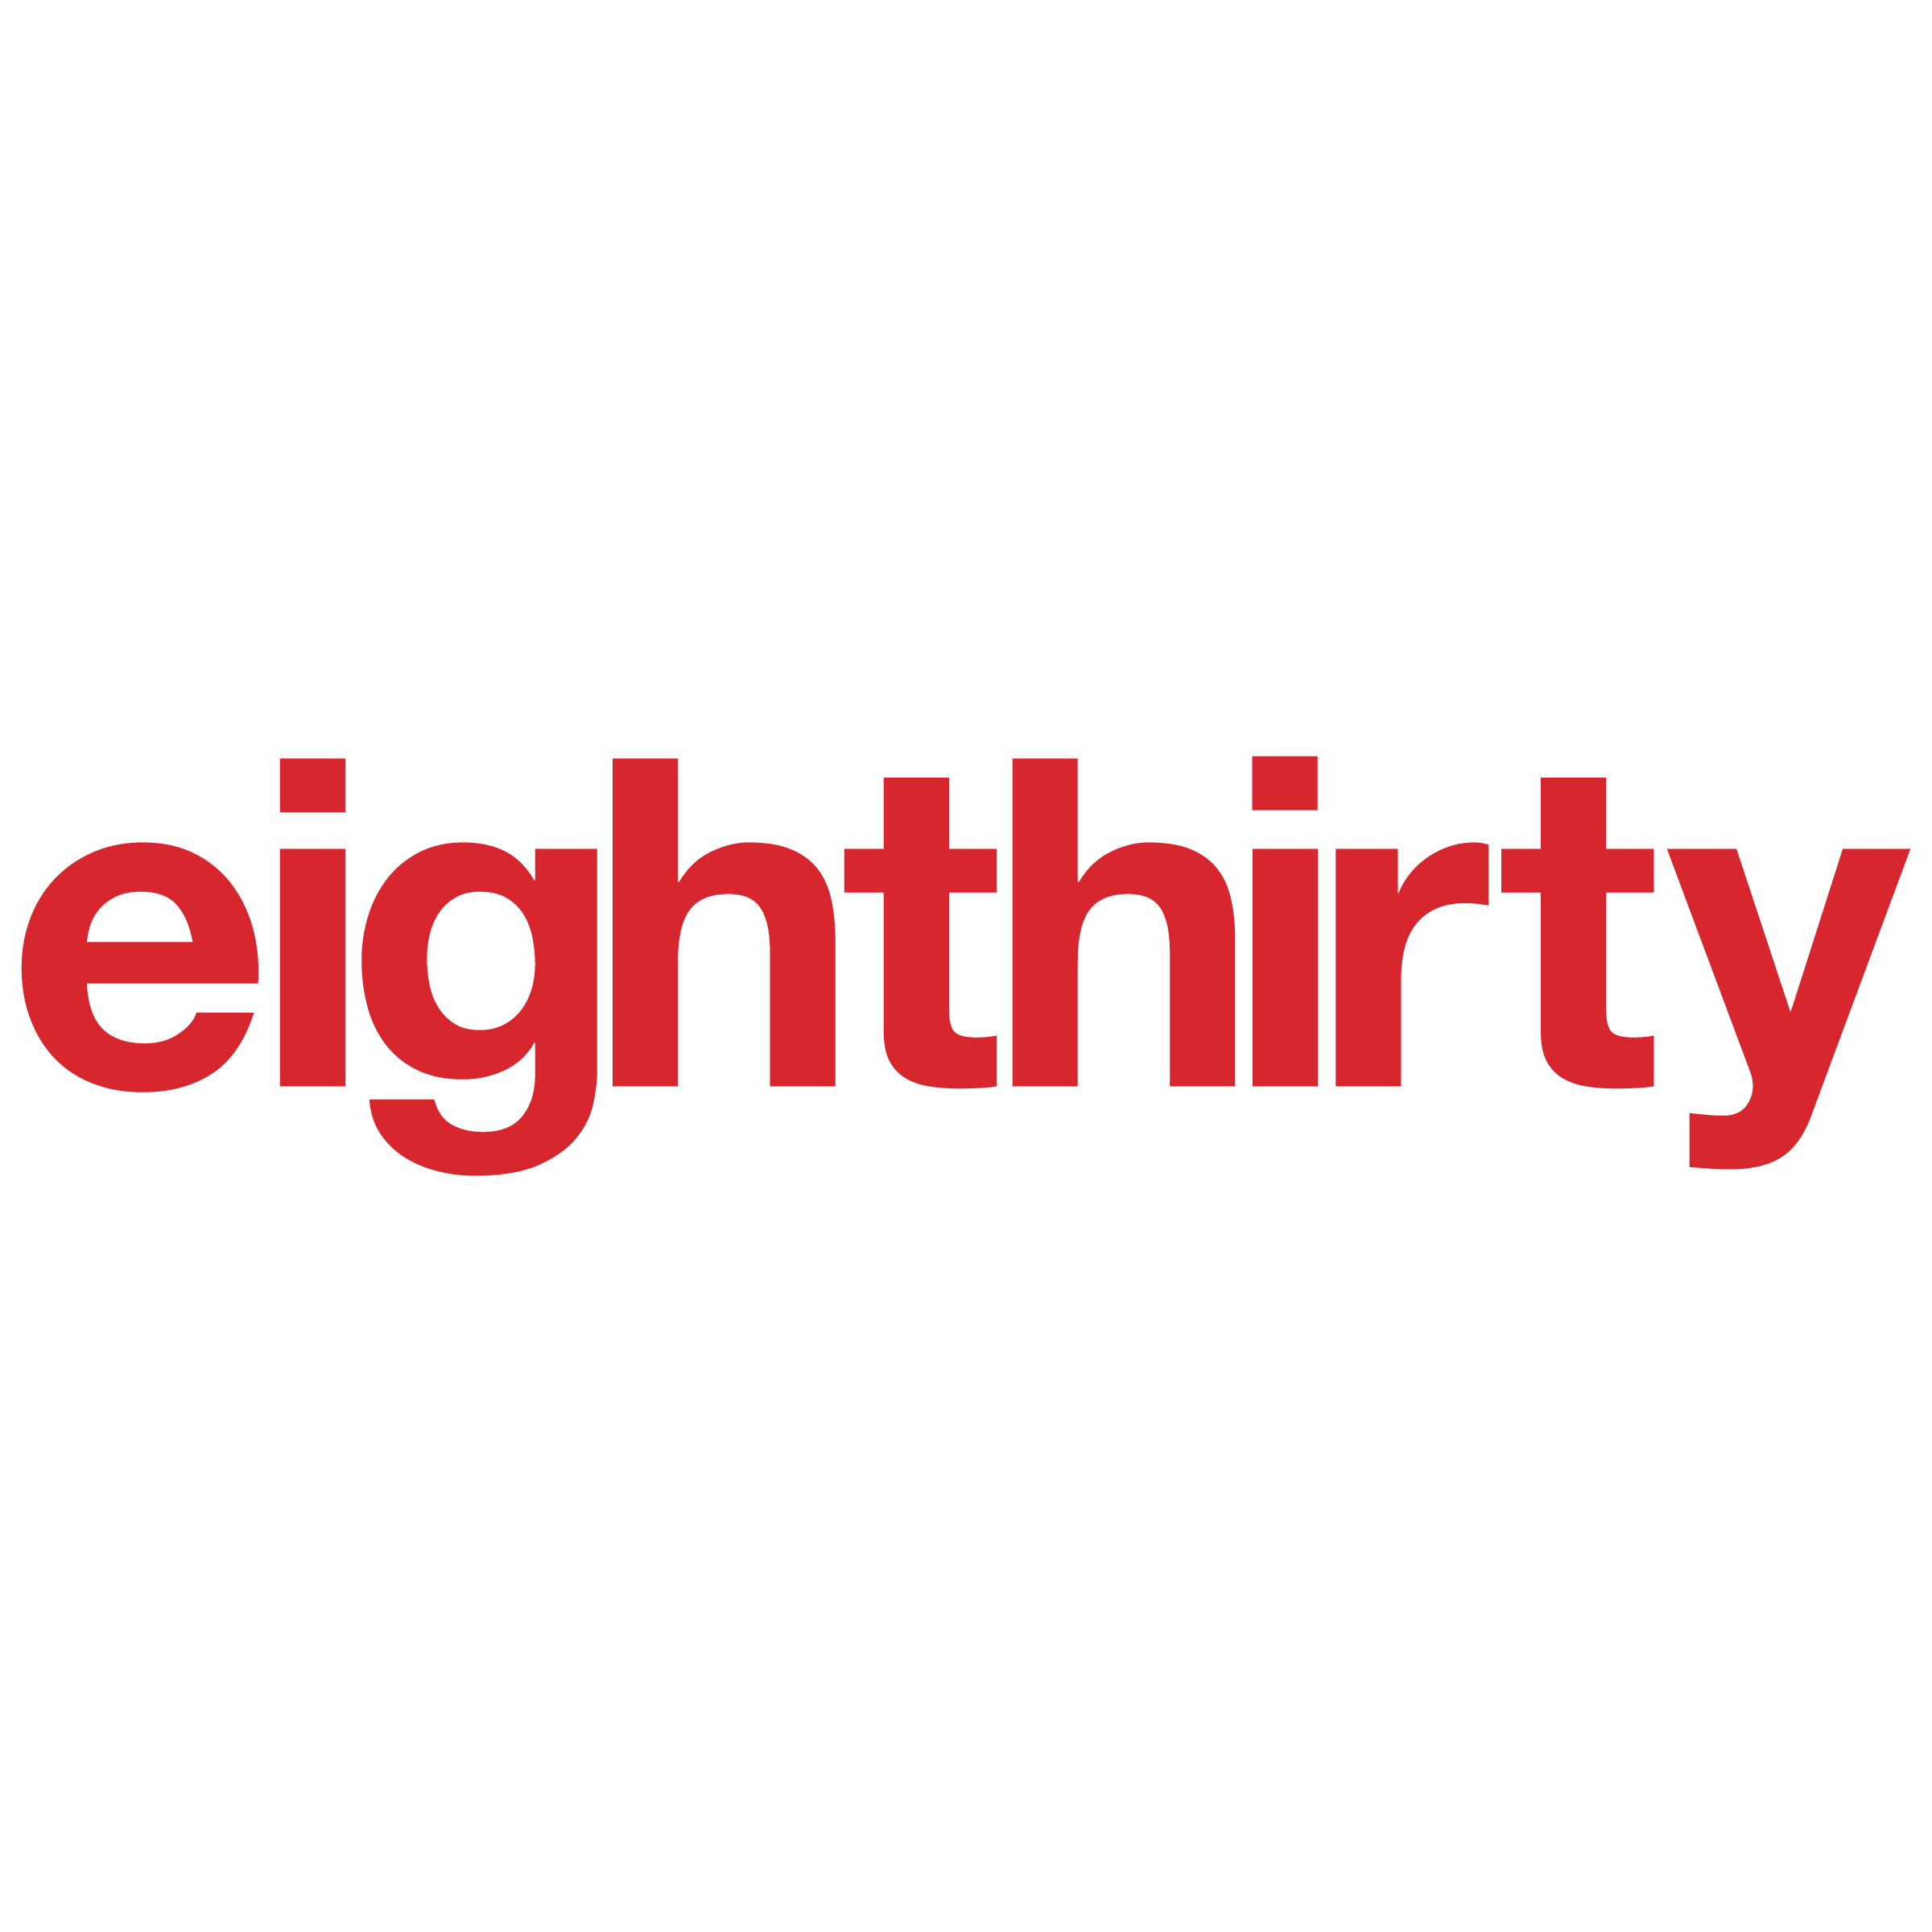 eighthirty logo